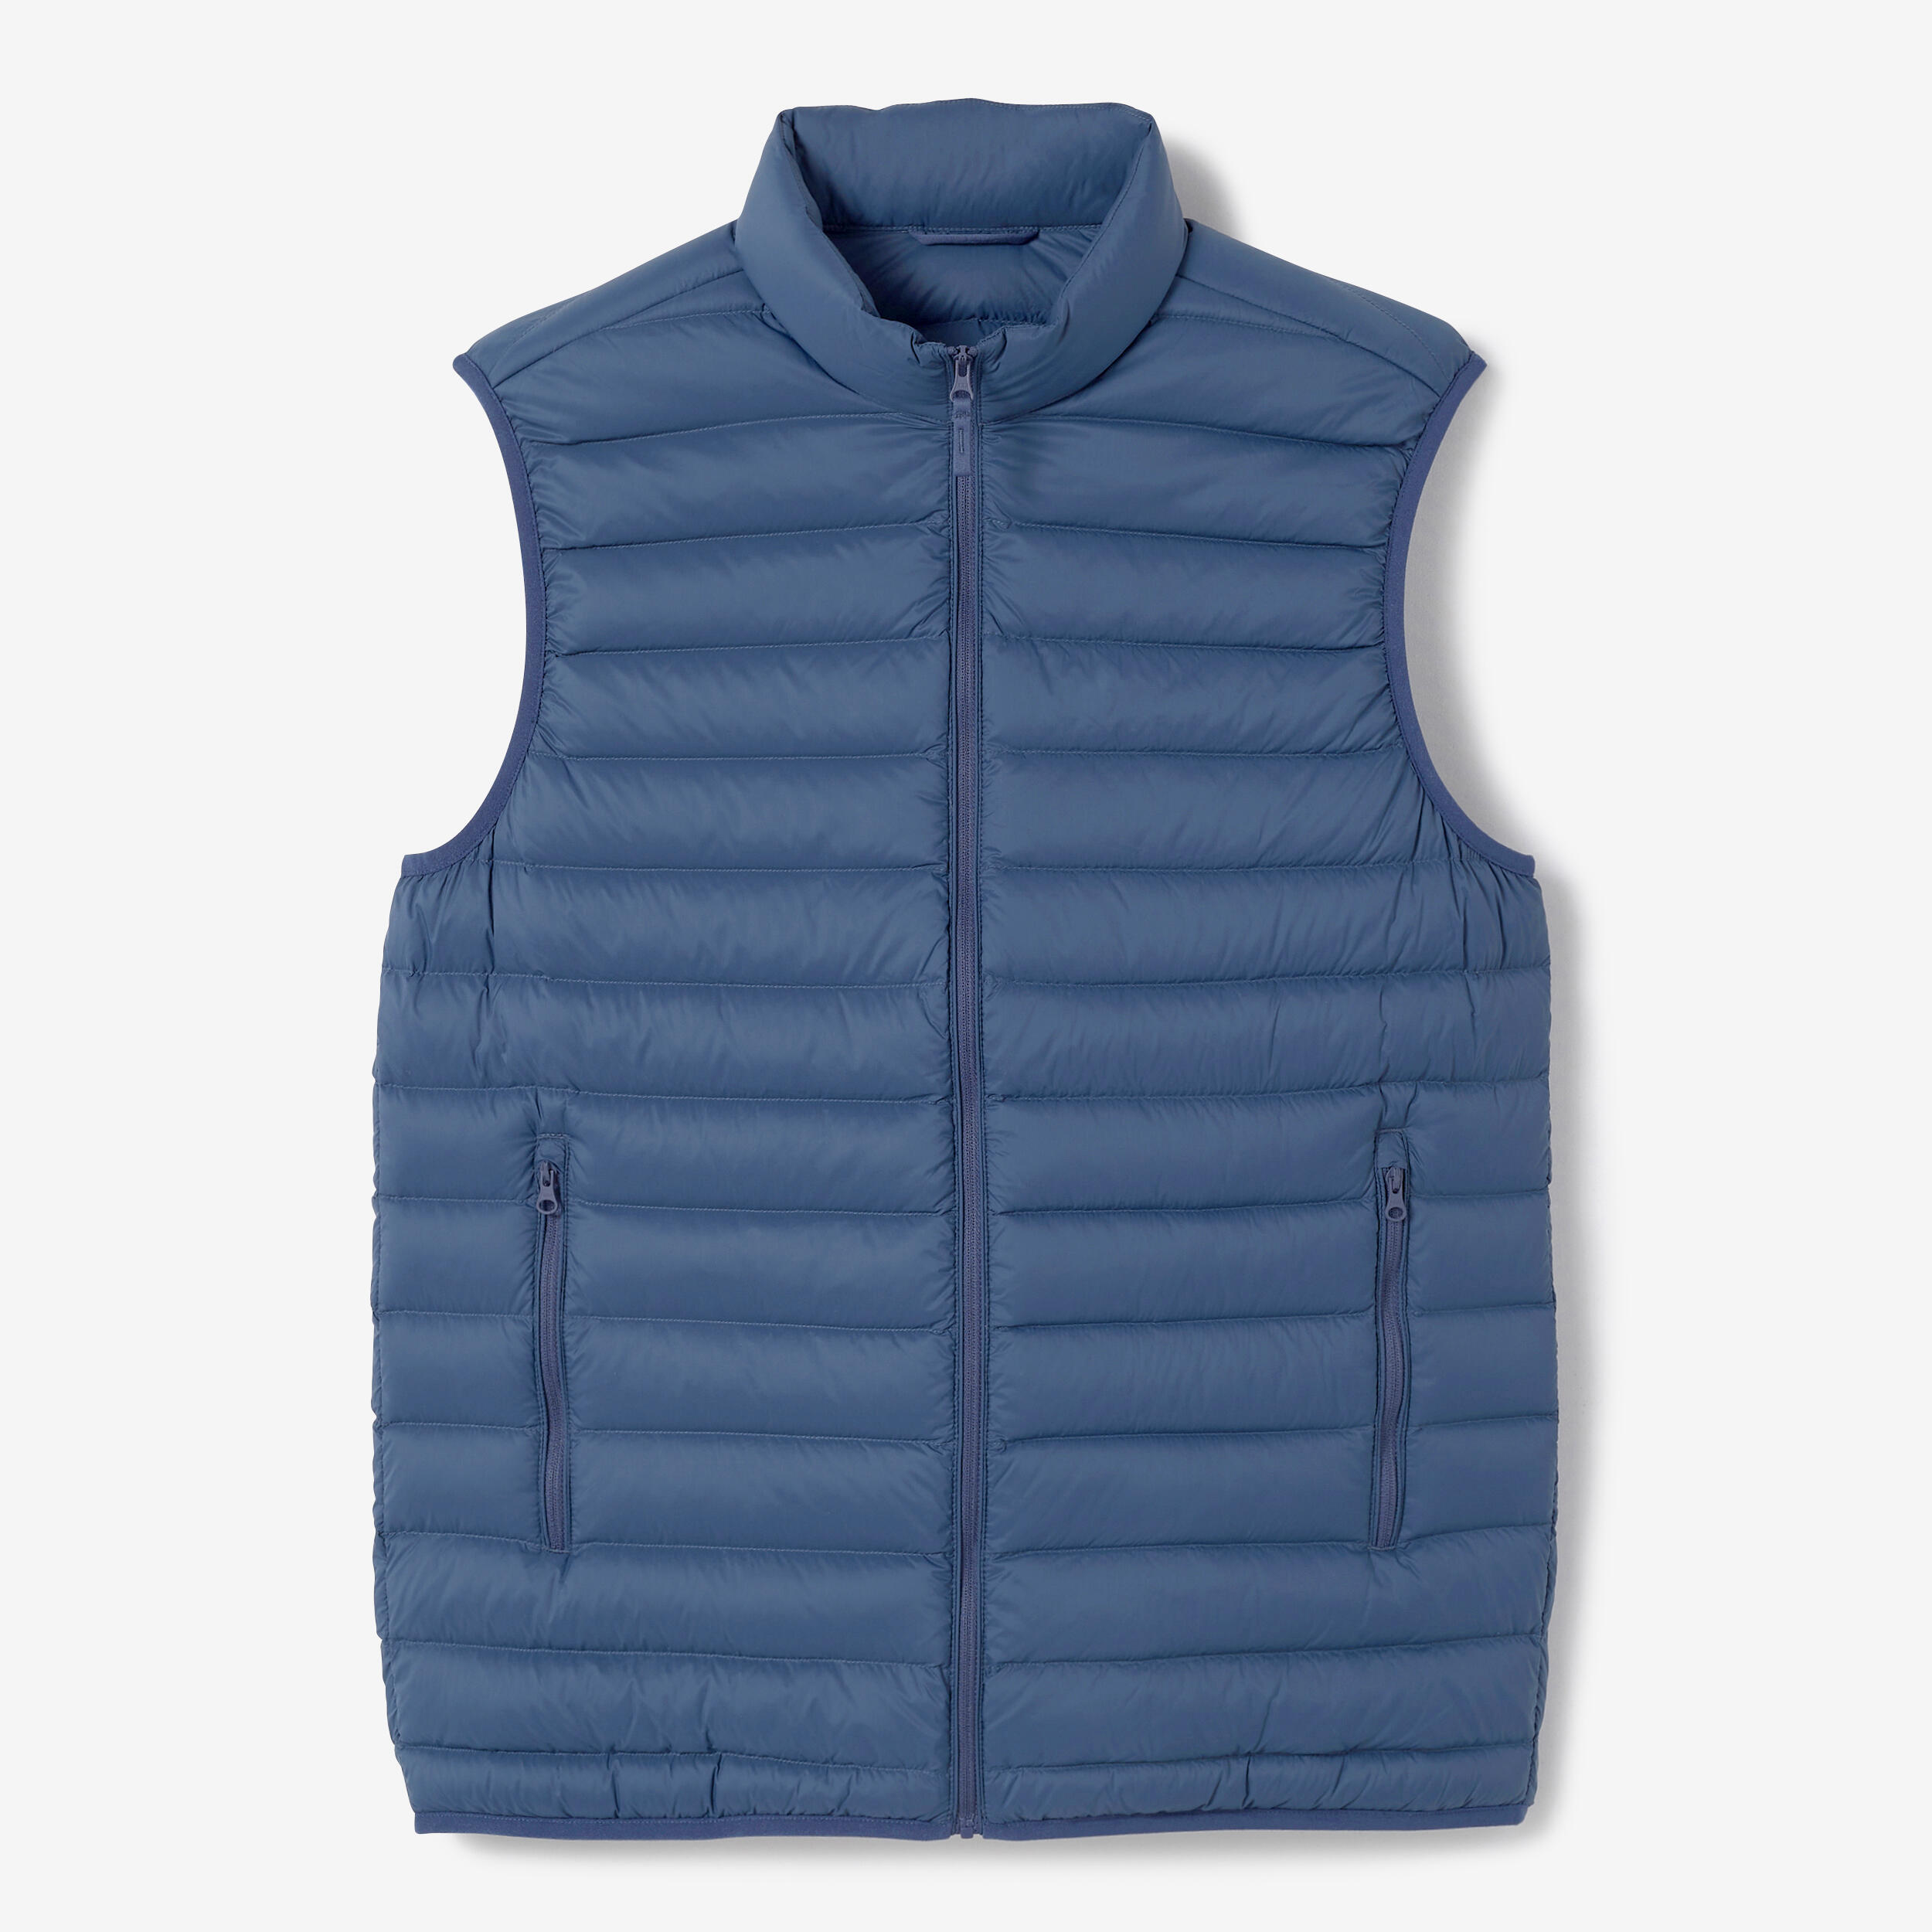 Men's golf sleeveless down jacket - MW500 blue 15/18